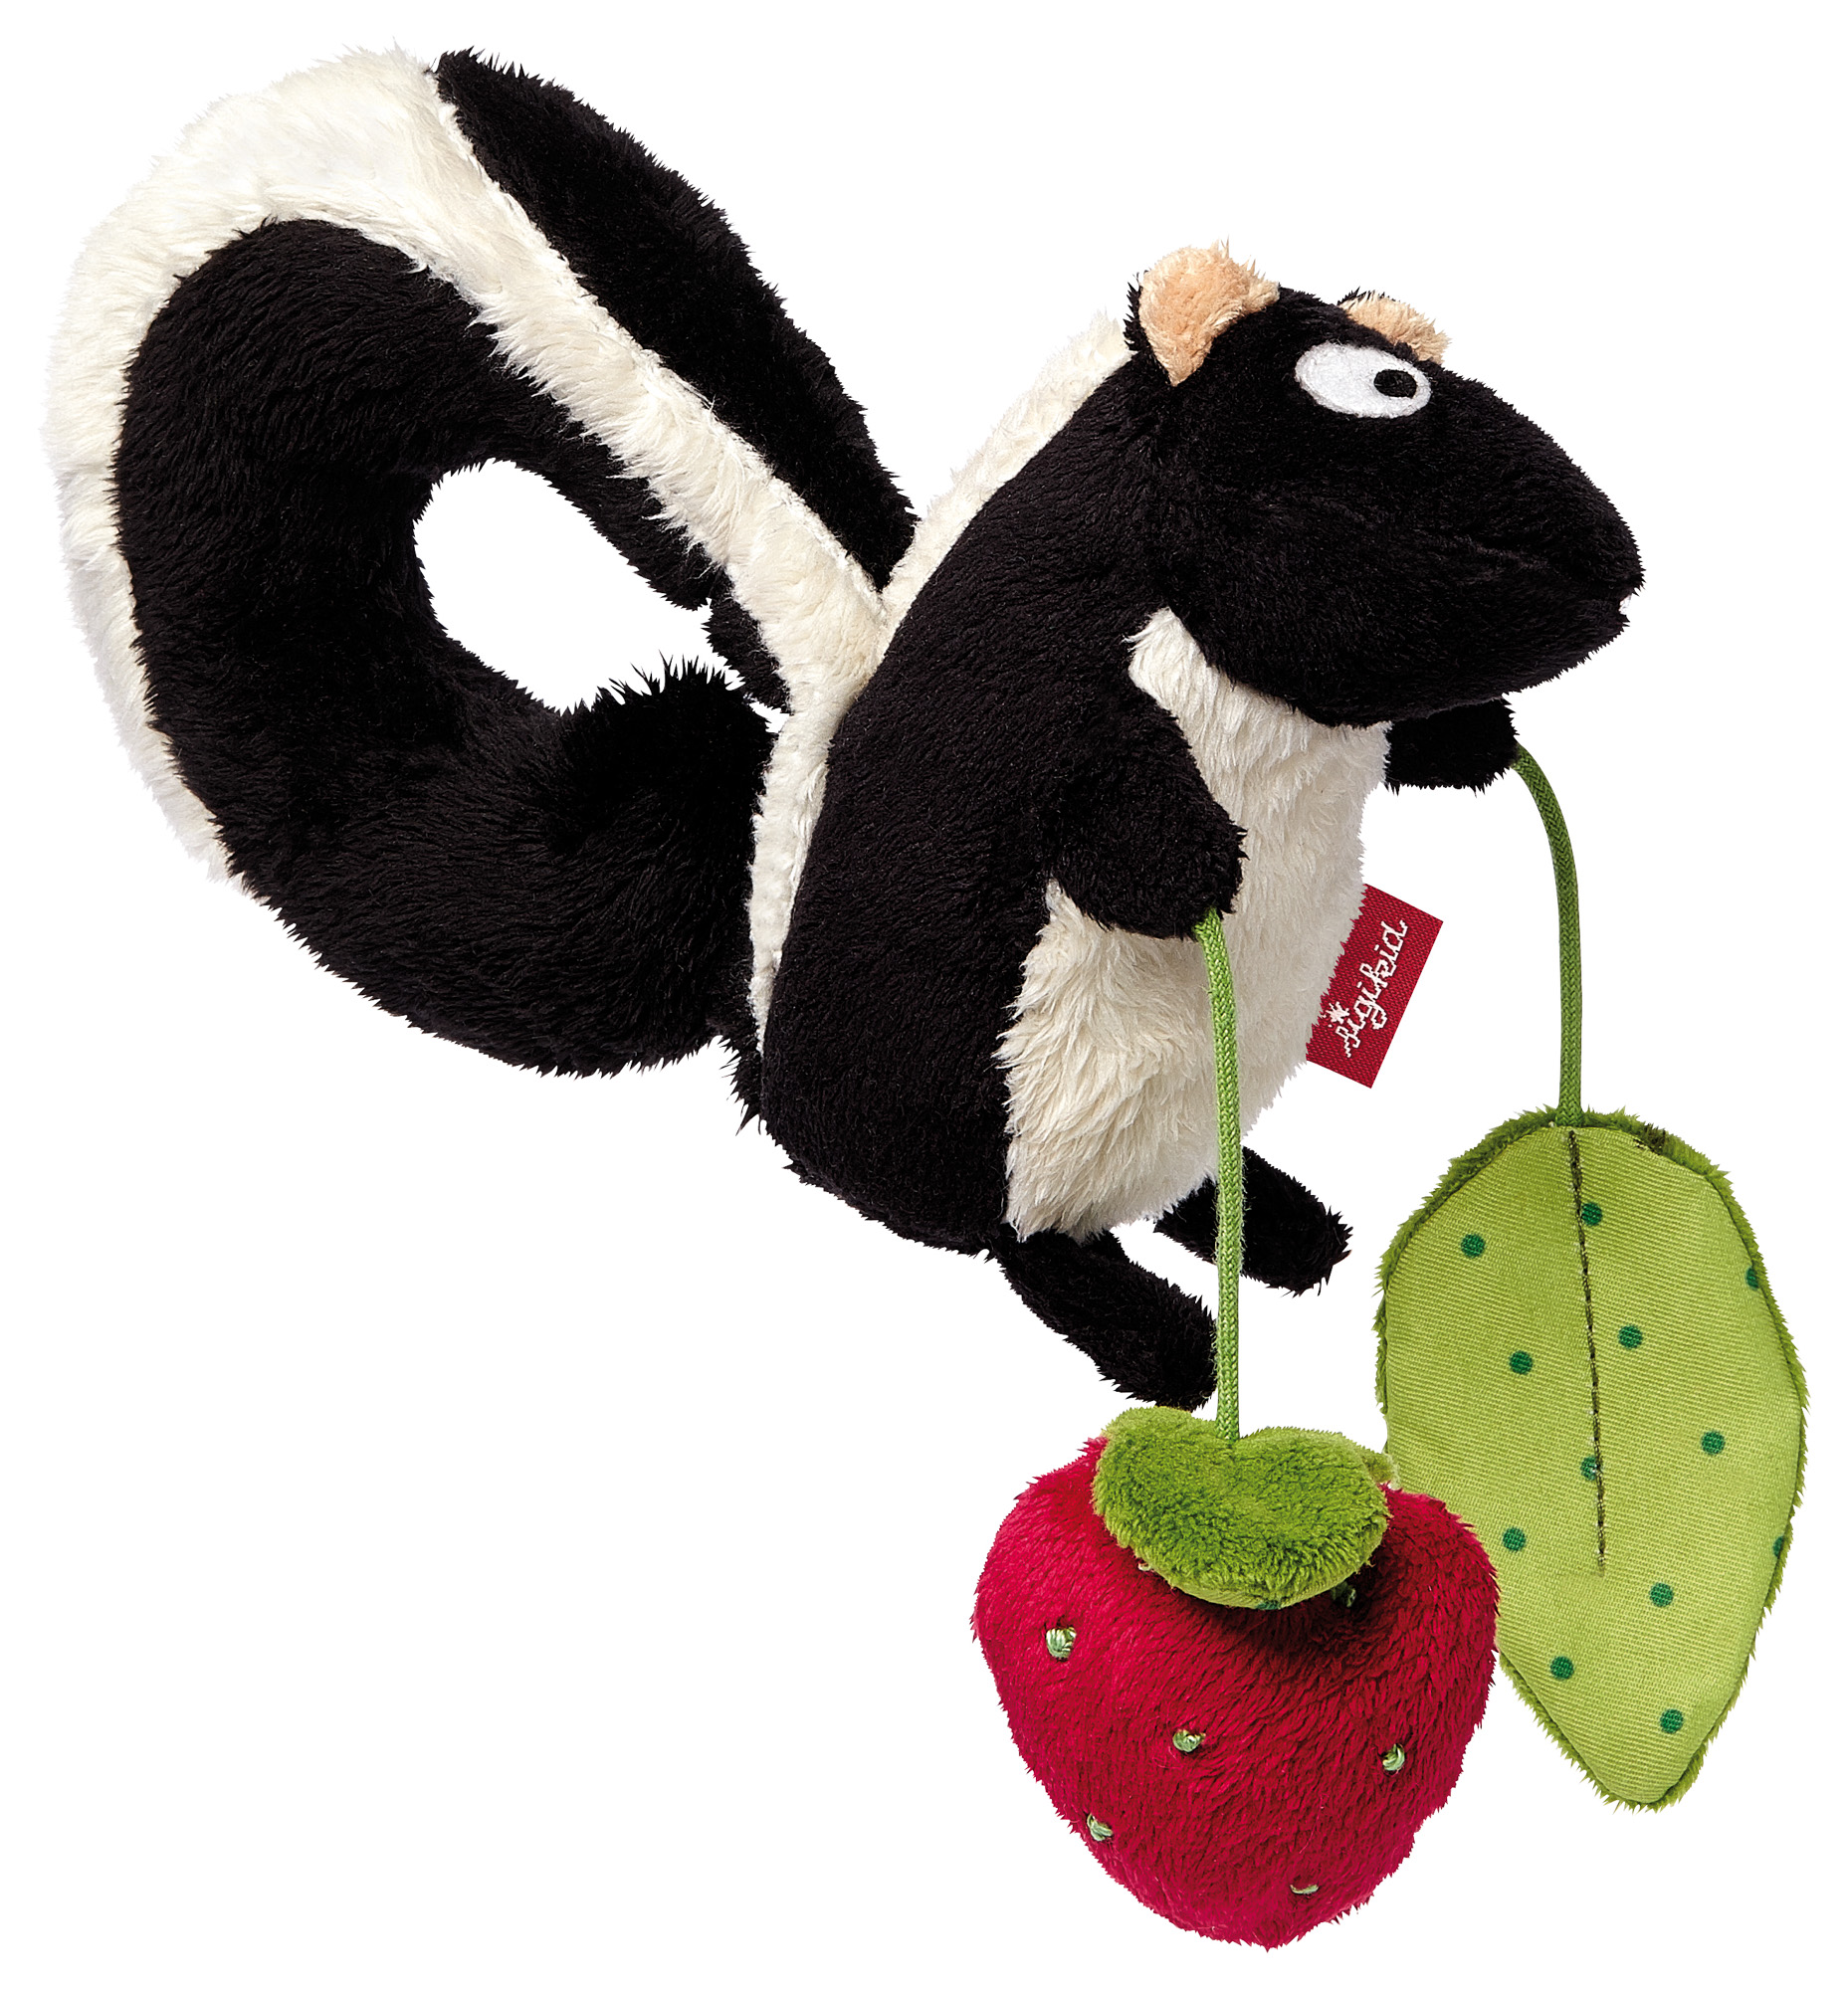 Hanging toy little skunk